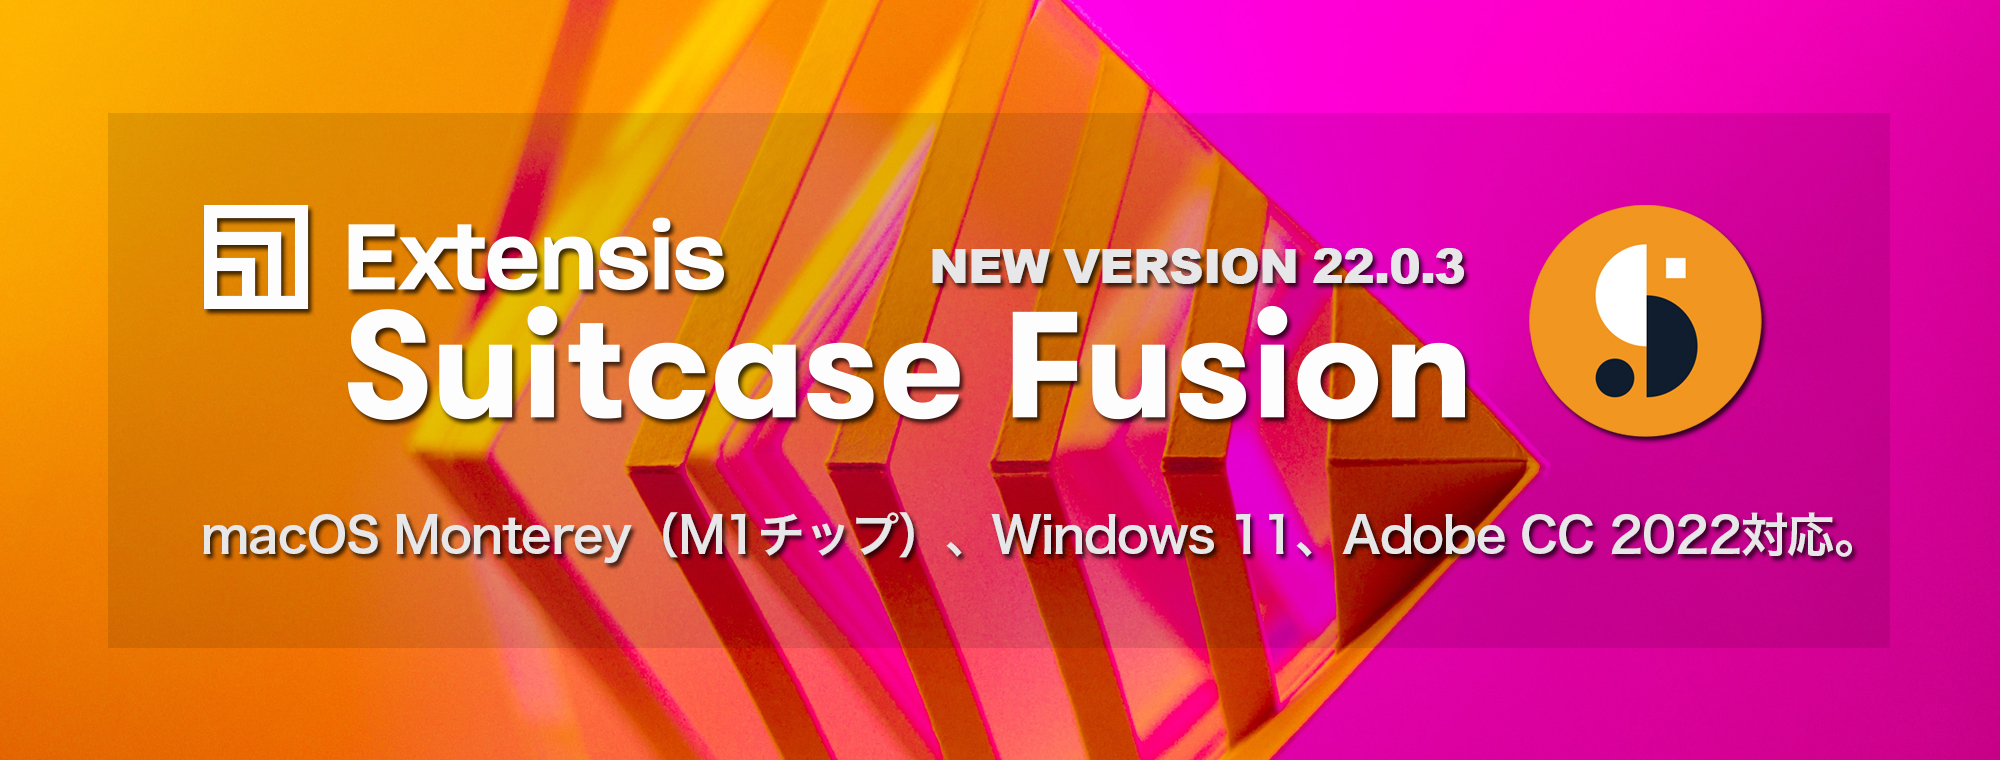 Suitcase Fusion v.22.0.3 リリース開始のお知らせ